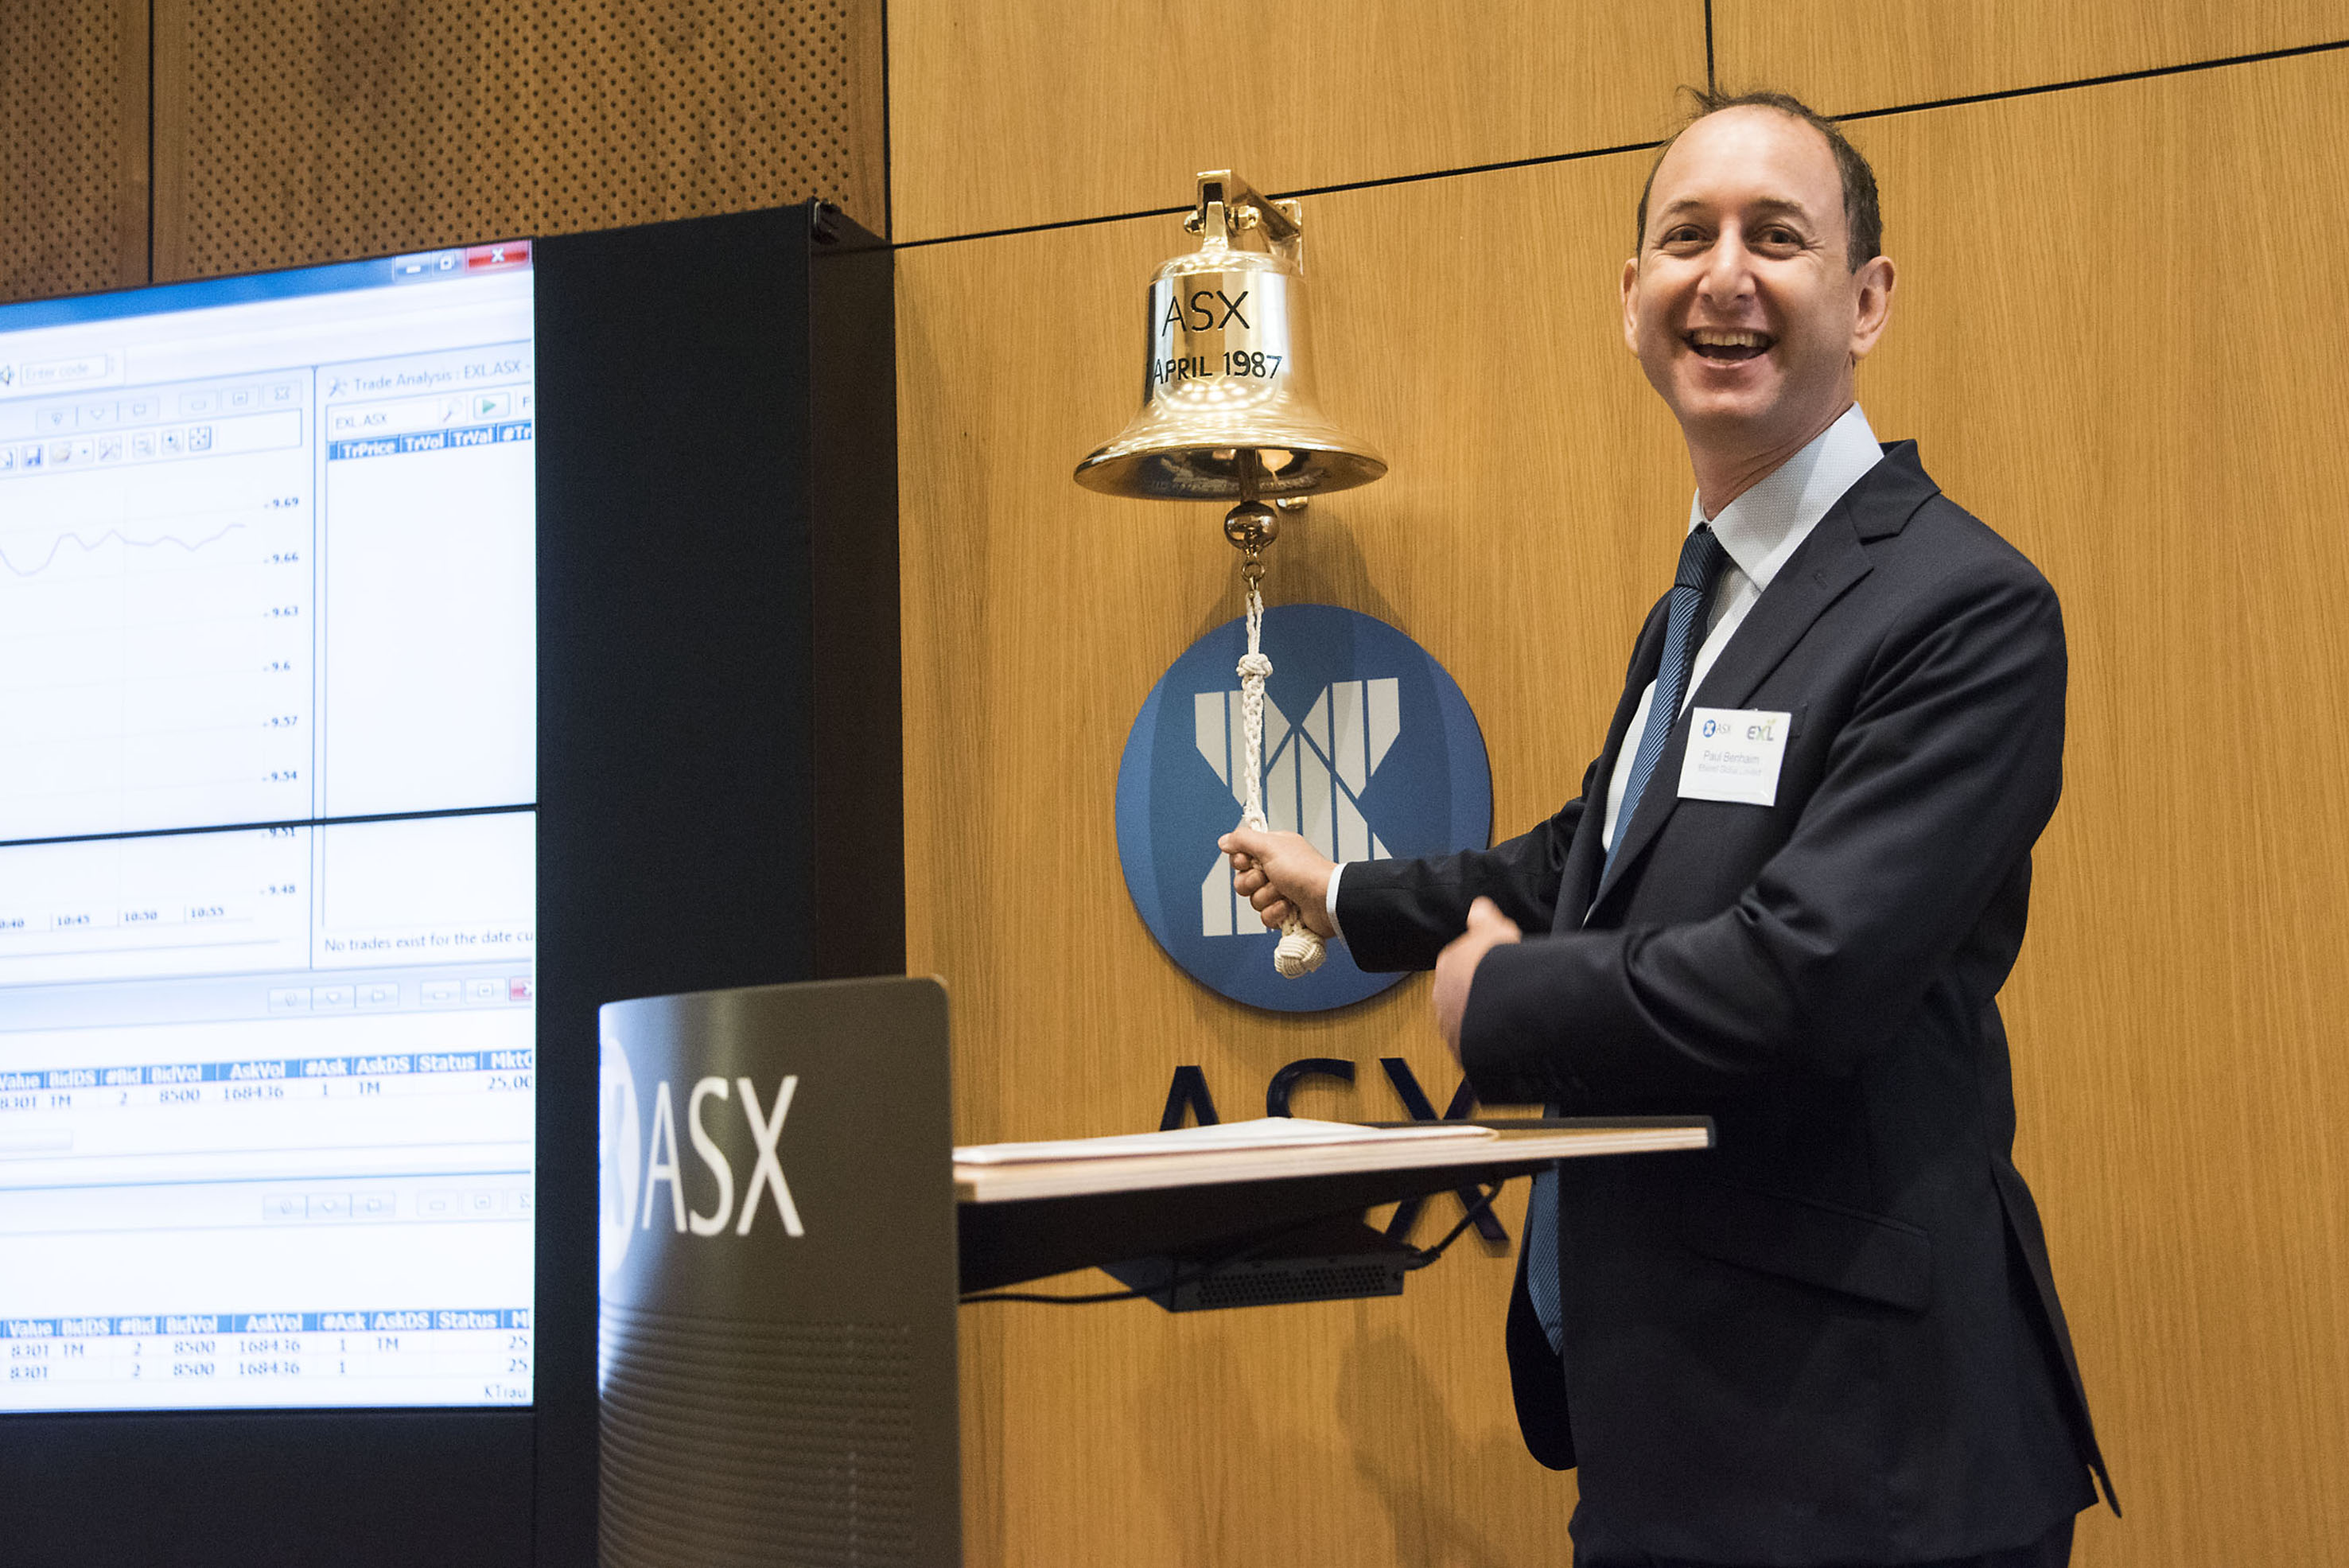 Paul Benhaim EXL CEO rings the ASX Bell on January 8, 2018